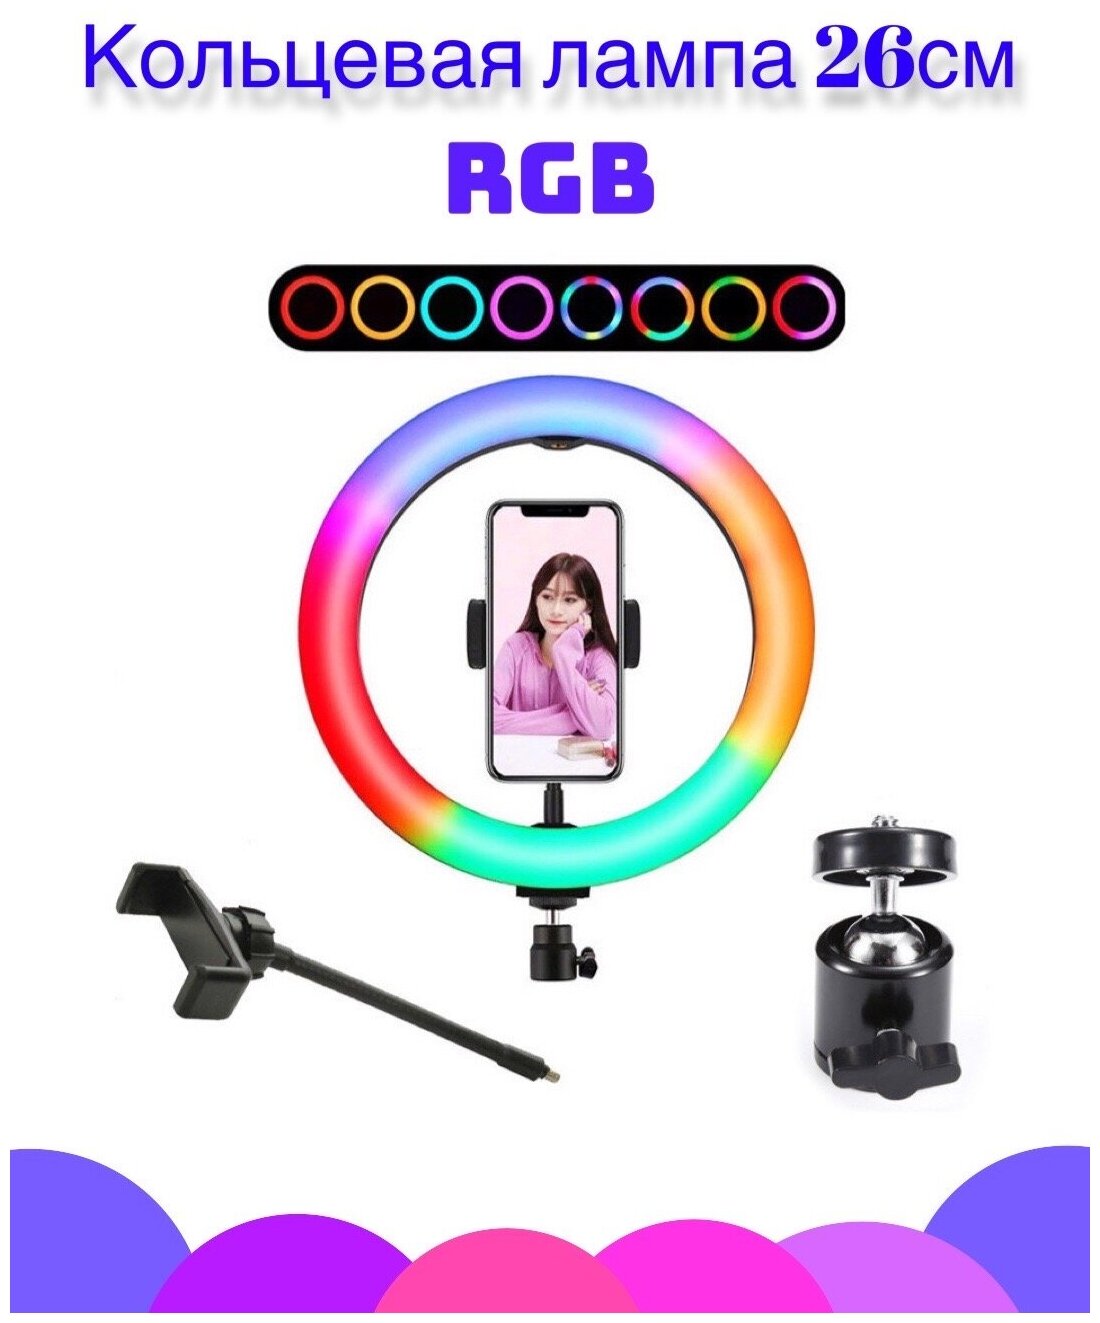 Кольцевая лампа RGB 26см / Светодиодная лампа 26см цветная/ Кольцевая с пультом ду без штатива